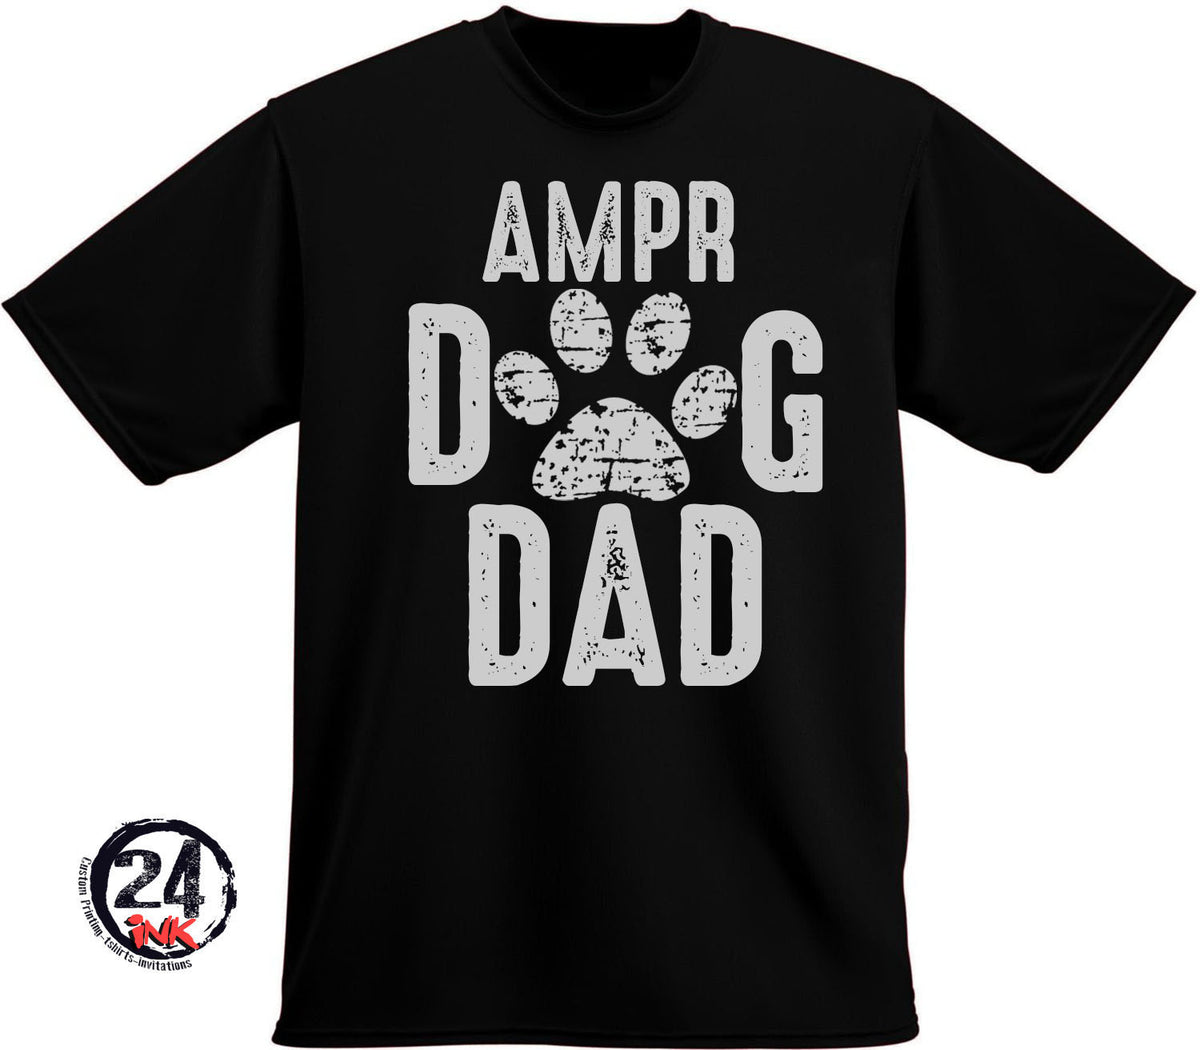 AMPR Dog Dad t-shirt